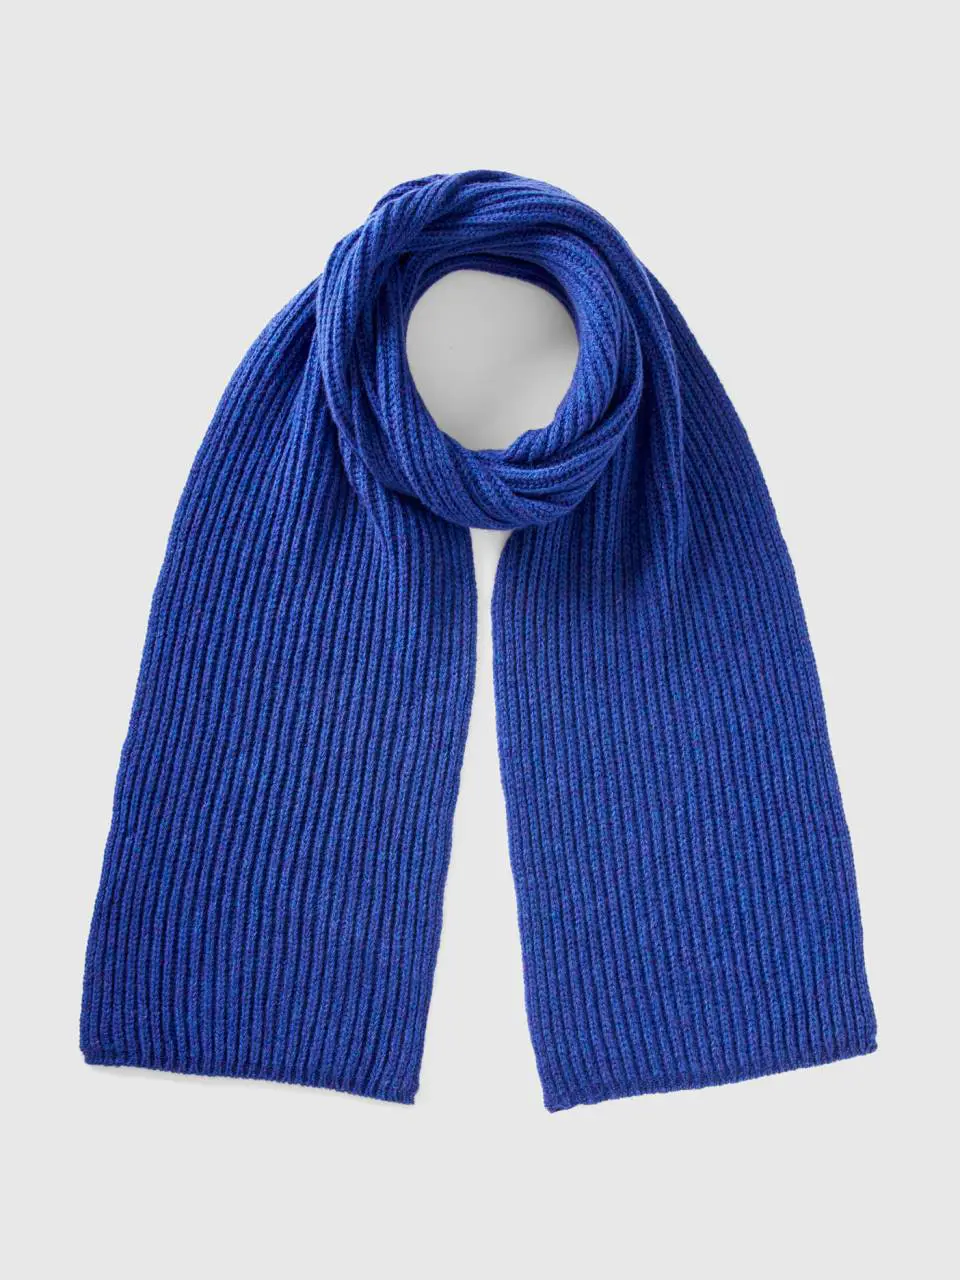 Benetton pure virgin wool scarf. 1